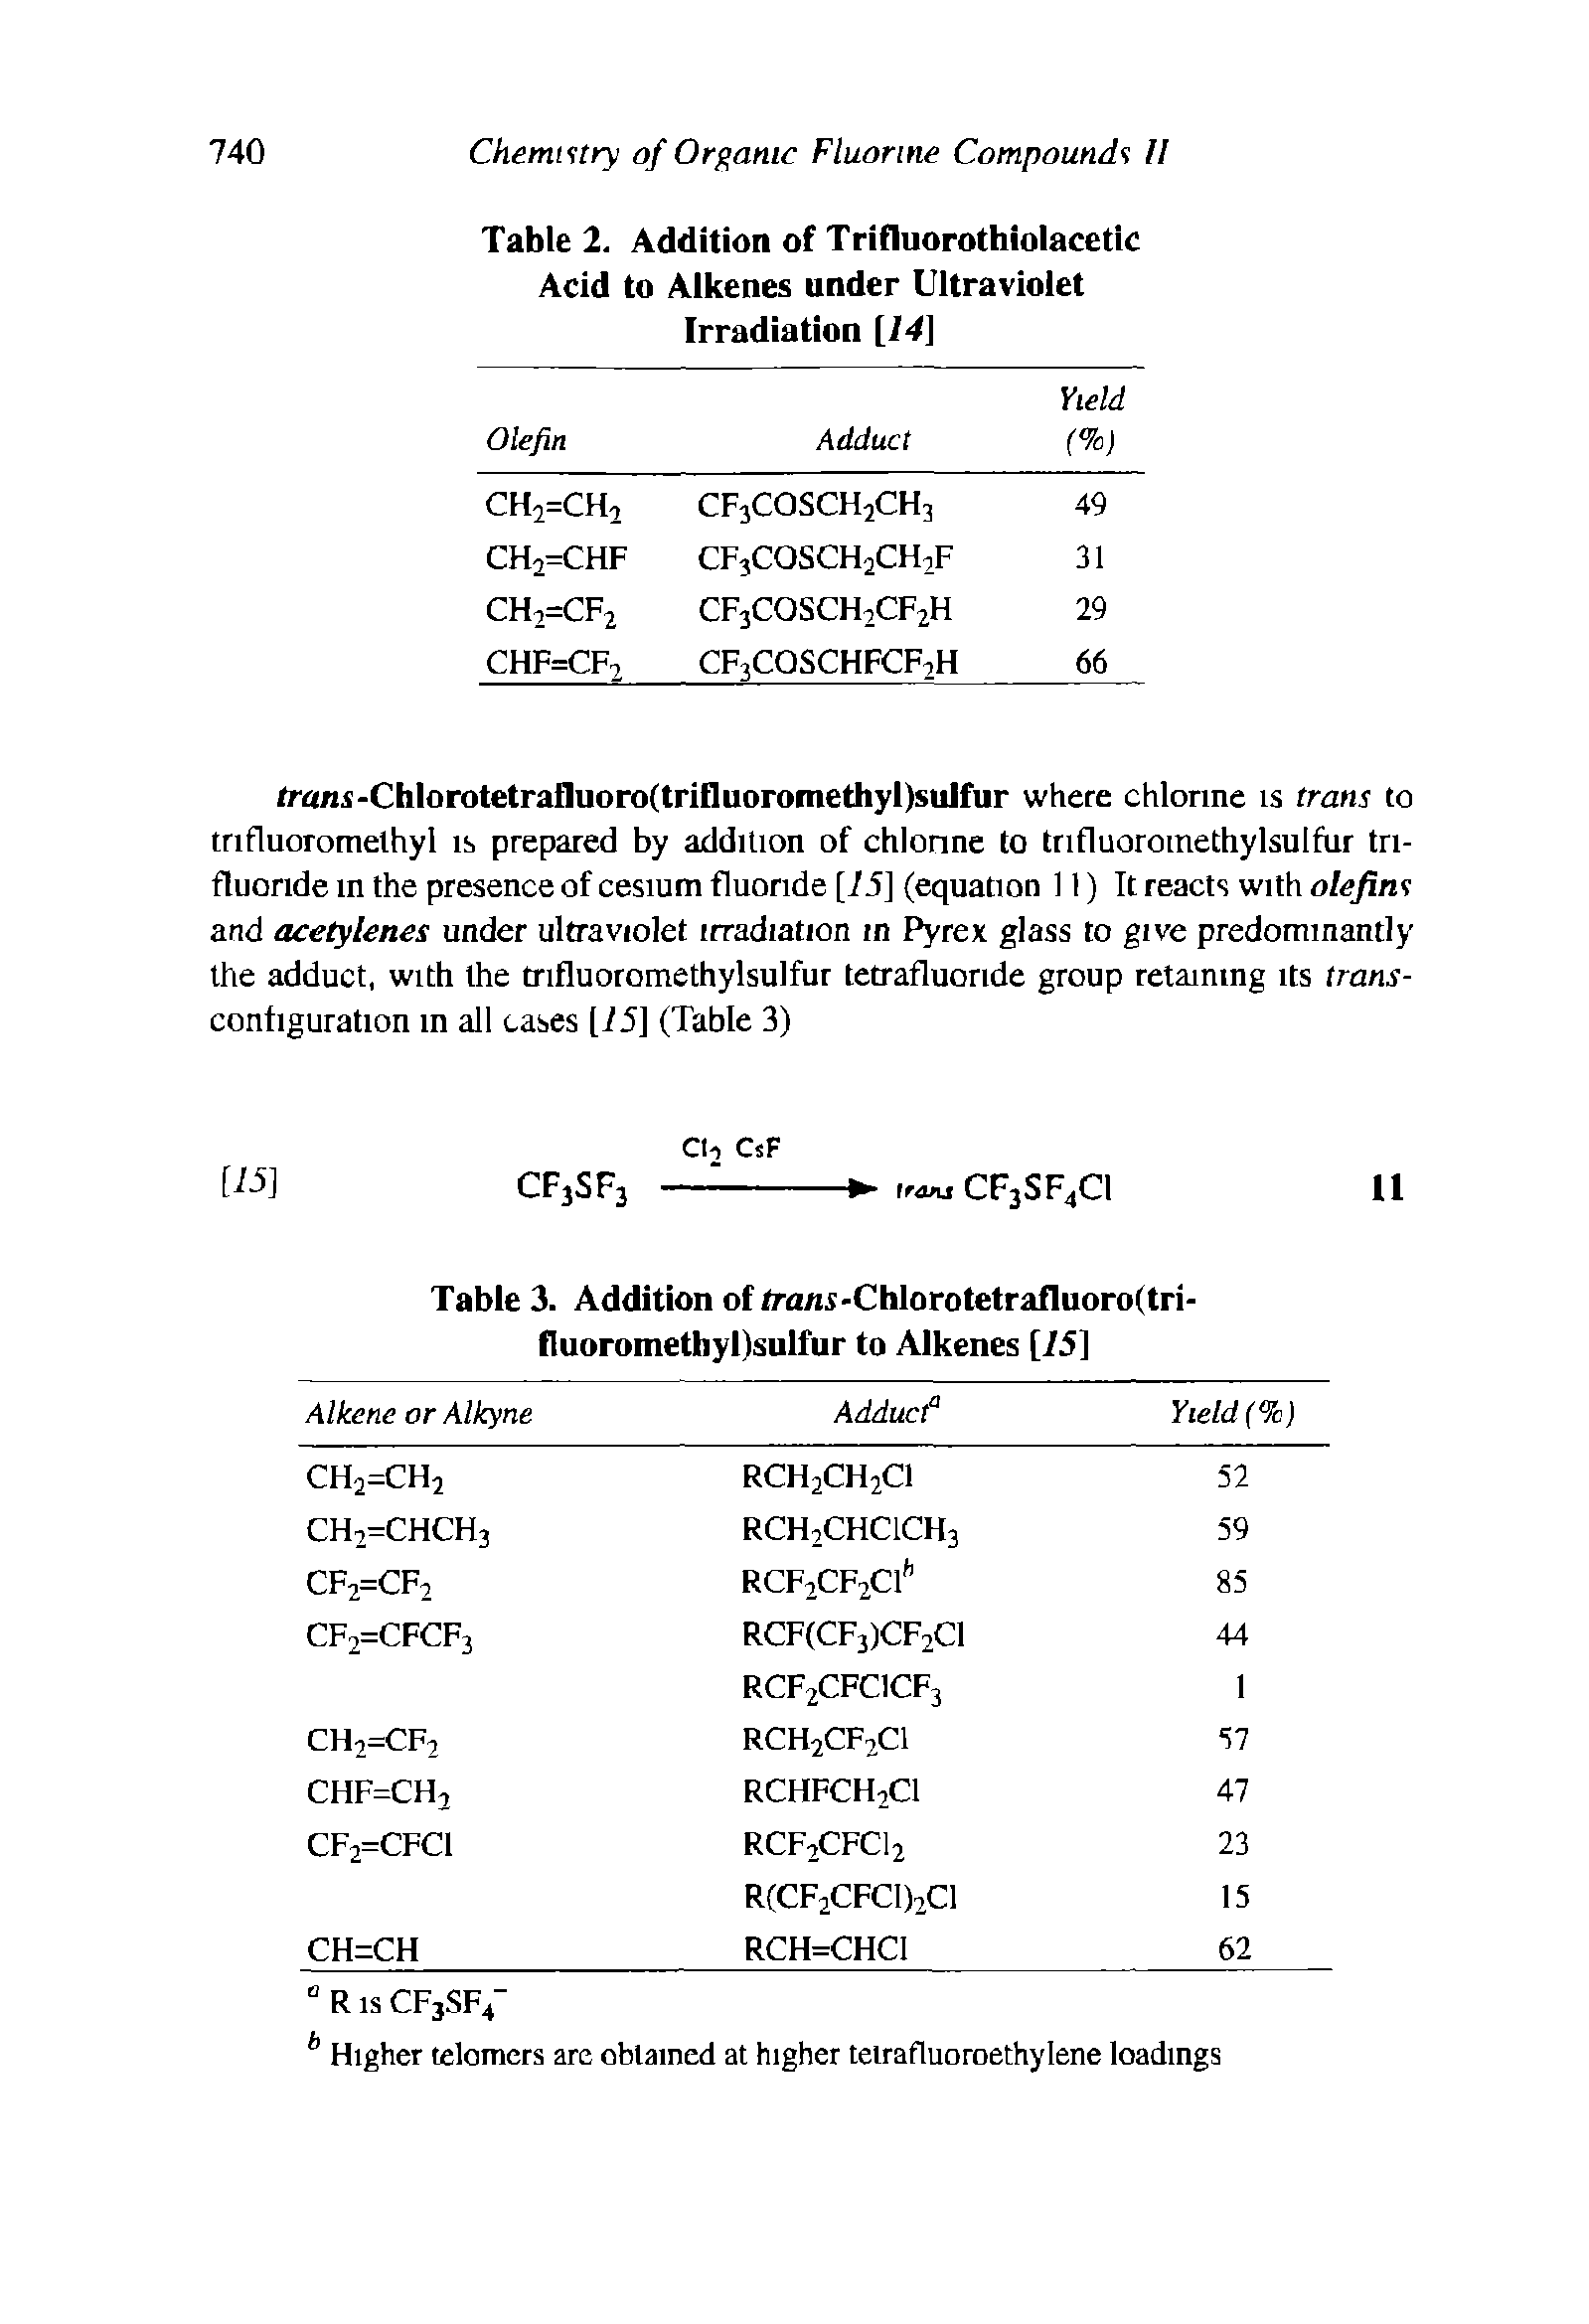 Table 3. Addition of tra/is-ChlorotetrafIuoro(tri-f1uoromethyl)sulfur to Alkenes [75]...